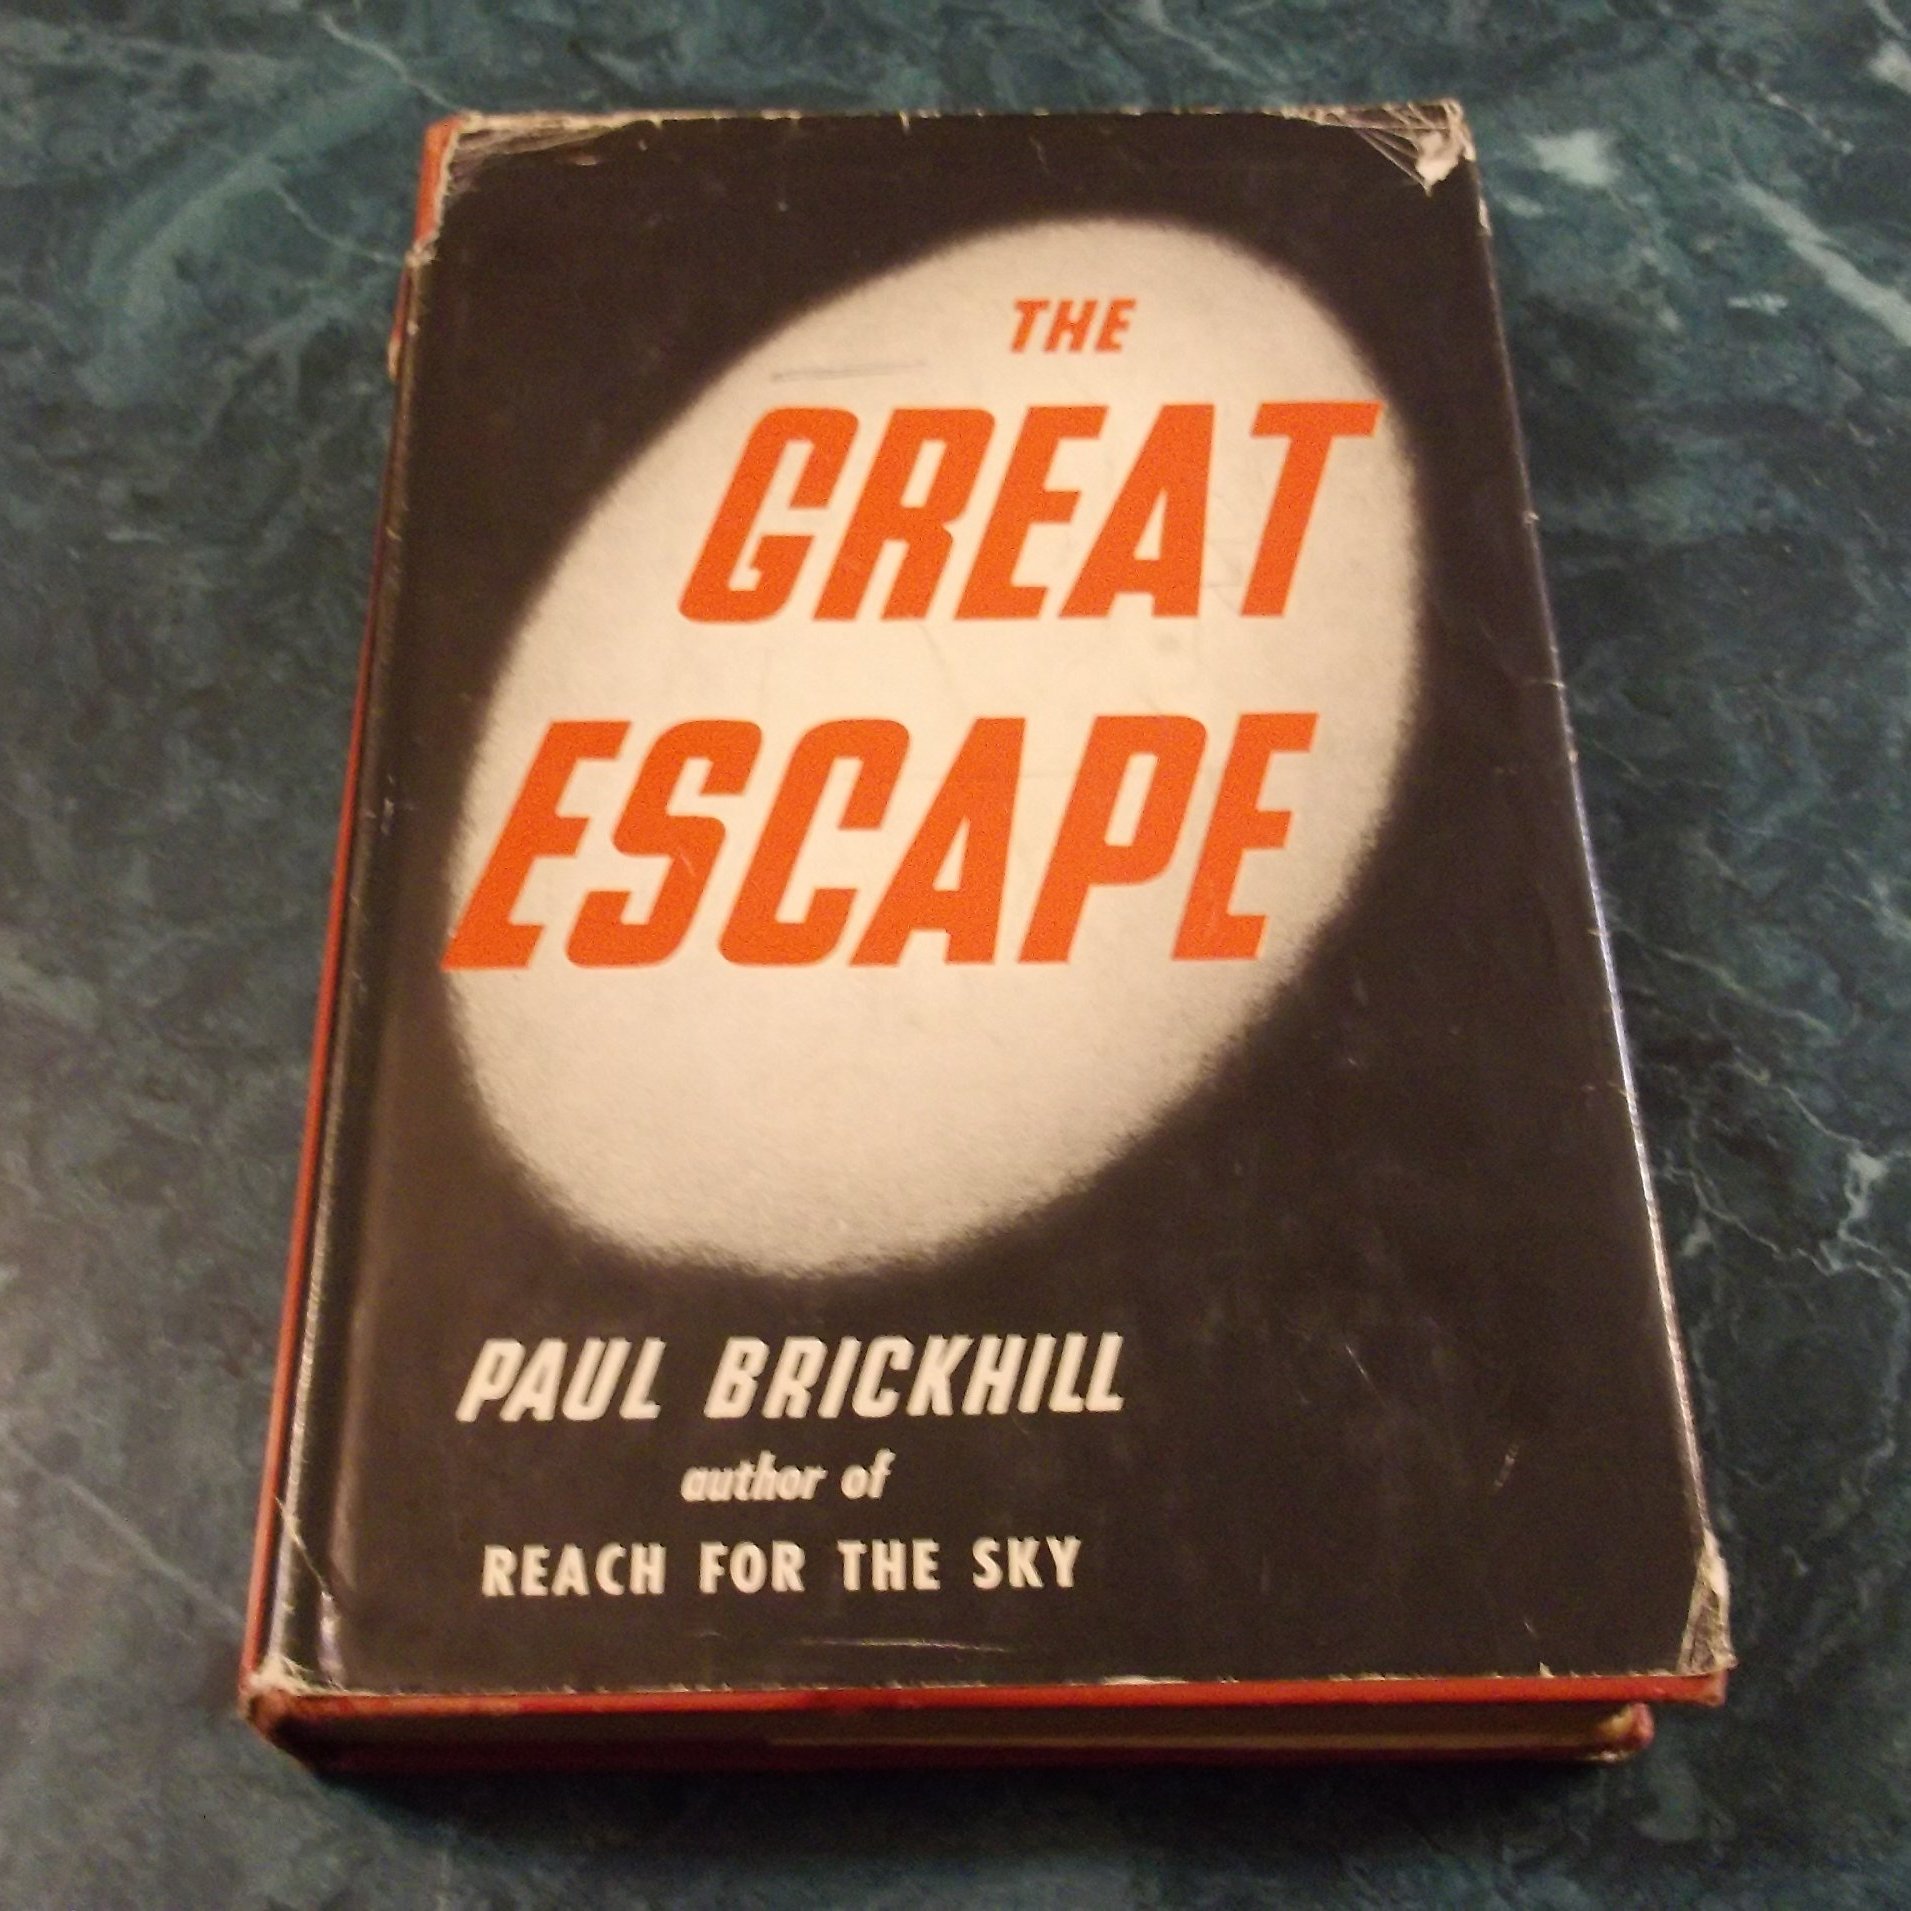 The great escape livre